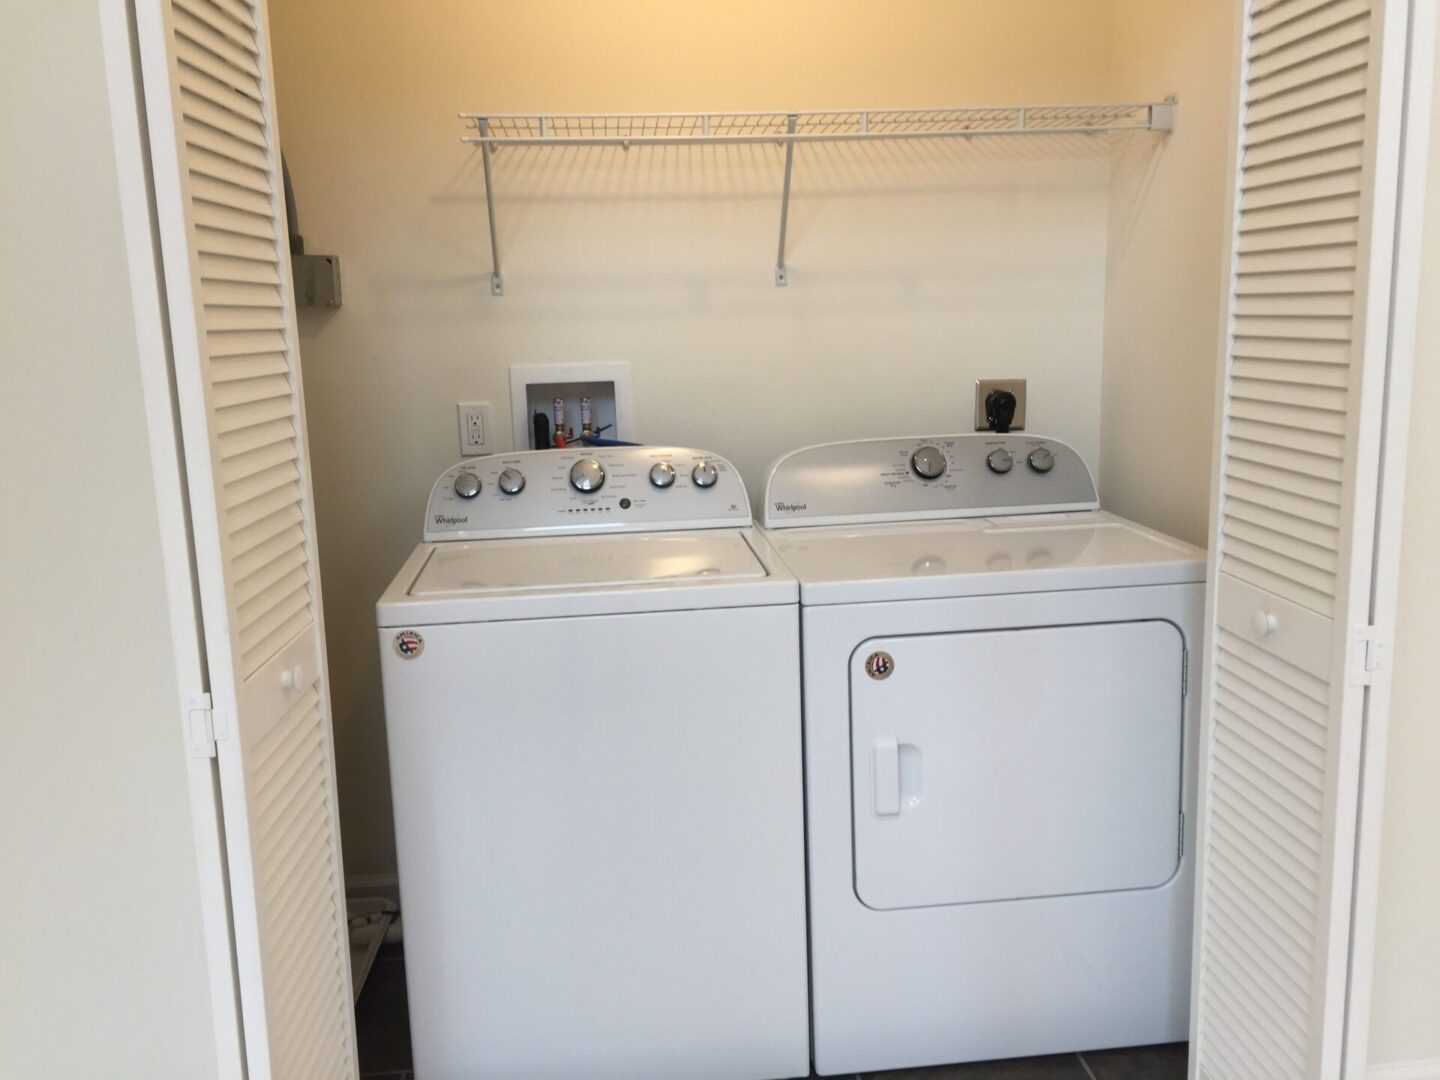 Laundry area with washing machines